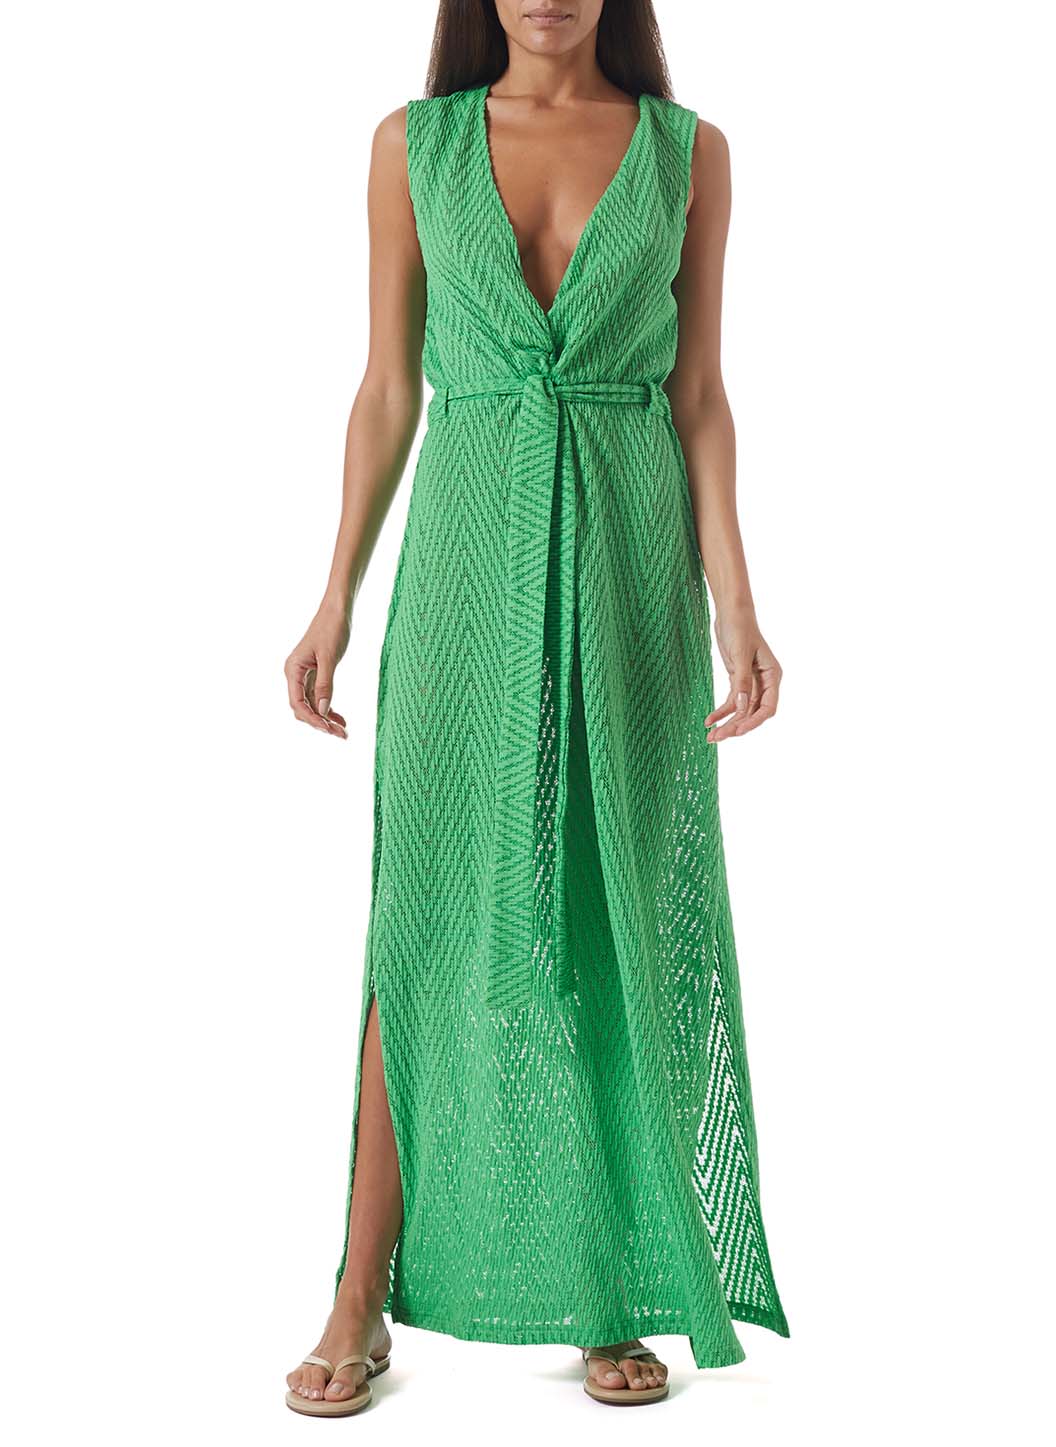 jenny green knit belted long dress model_F